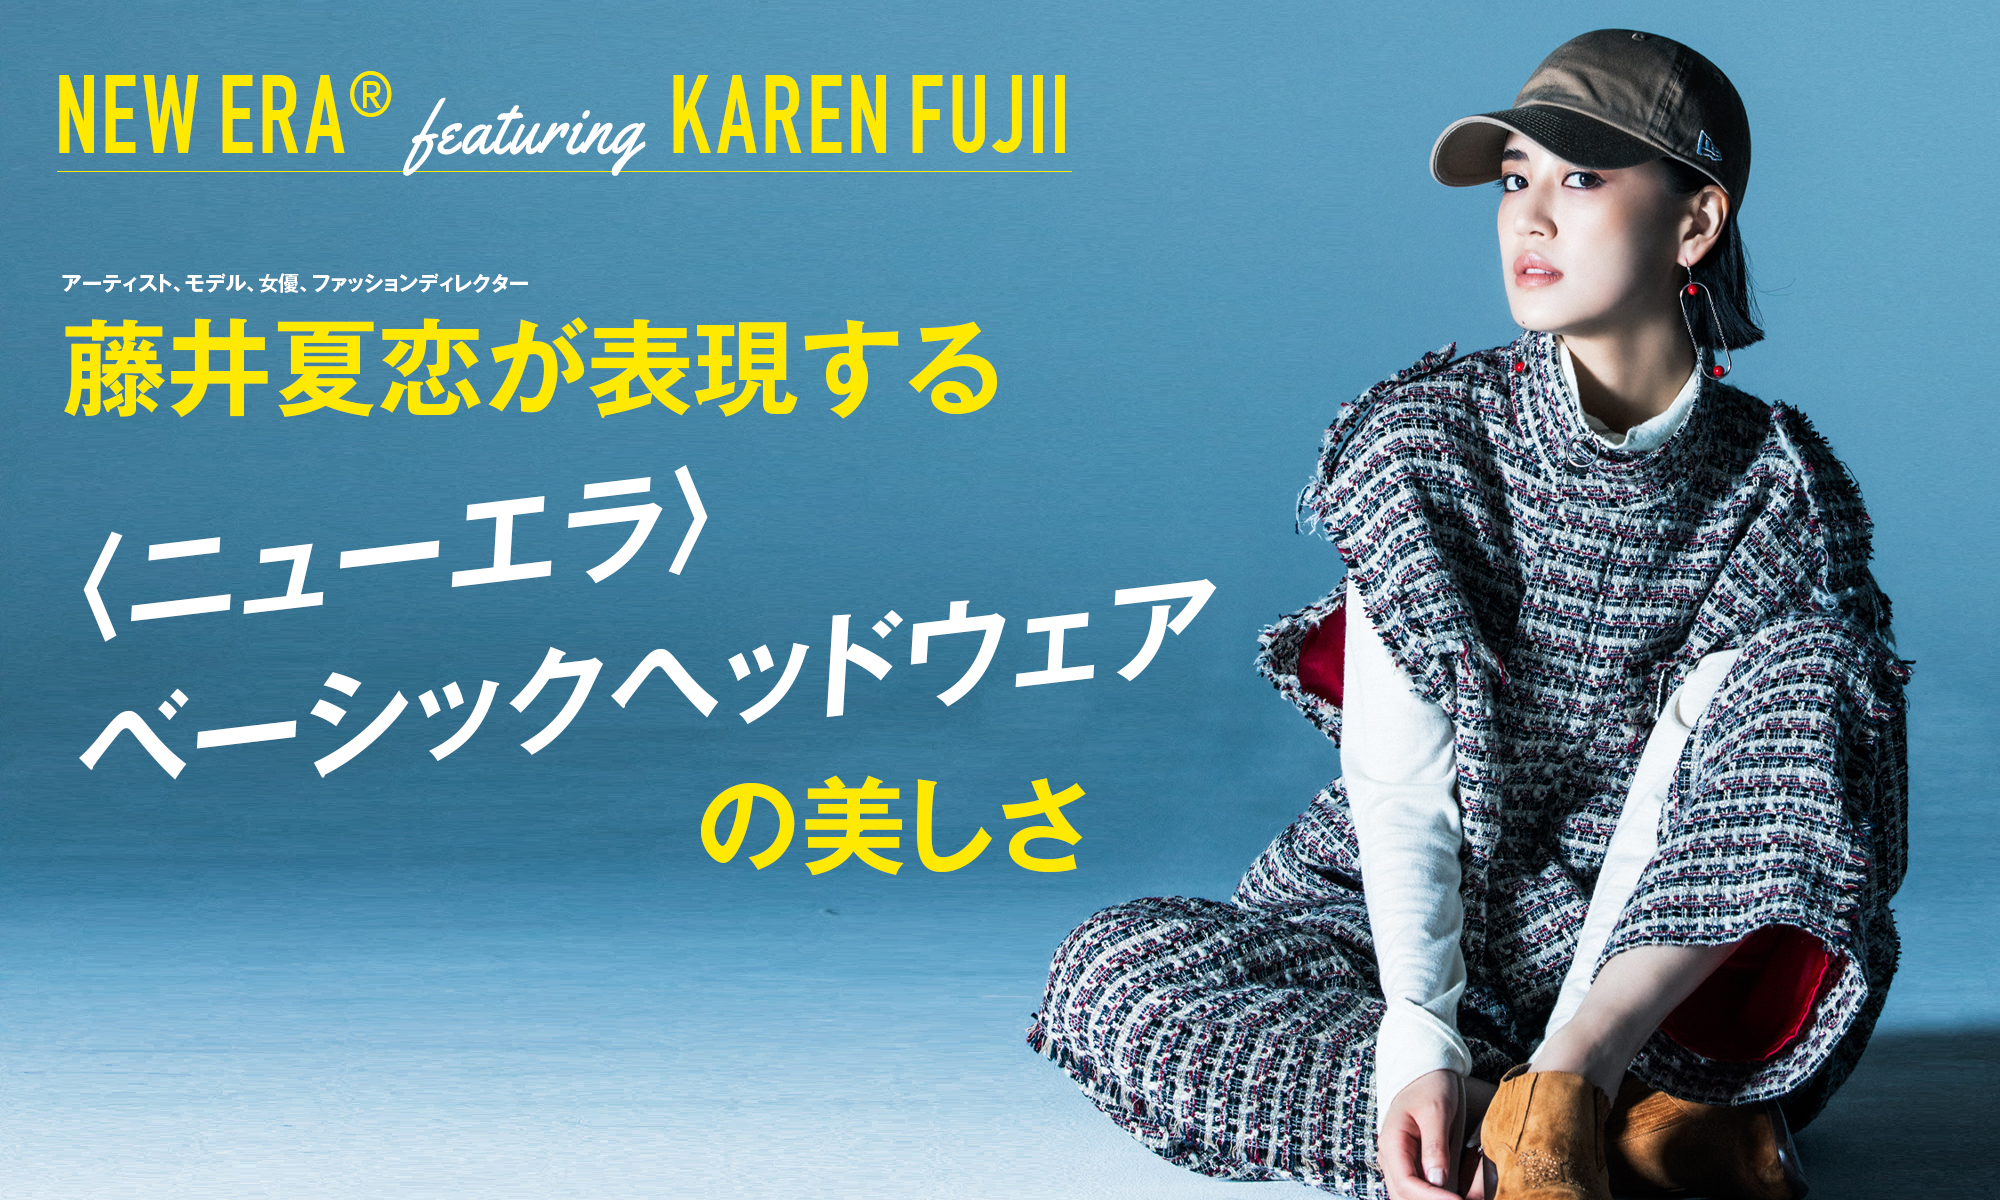 NEW ERA® featuring KAREN FUJII 藤井夏恋が表現する〈ニューエラ〉ベーシックヘッドウェアの美しさ